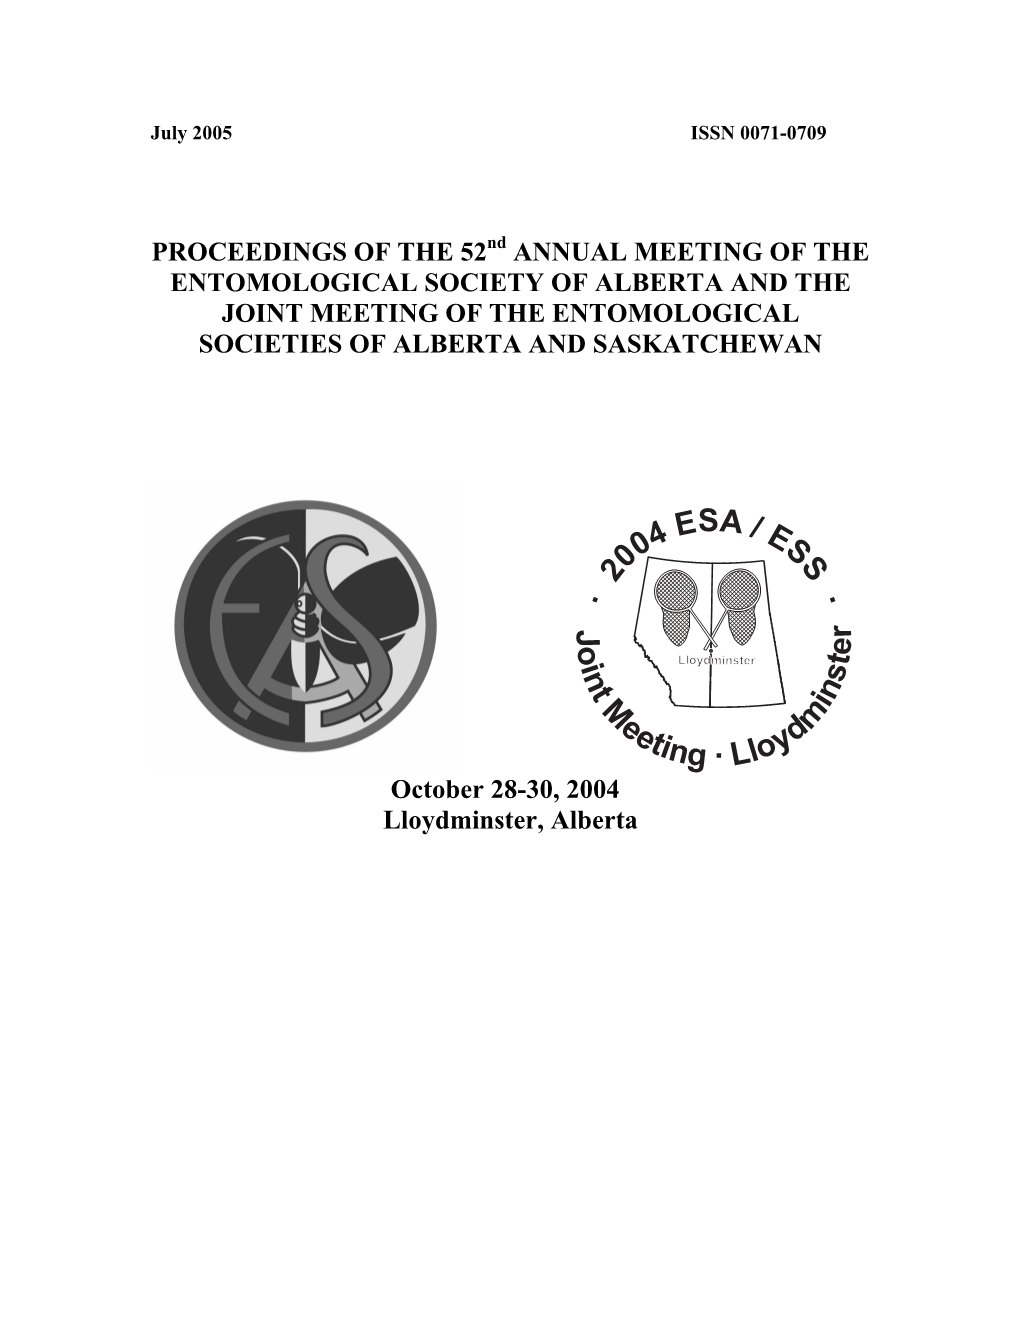 Proceedings of the Entomological Society of Alberta 2004